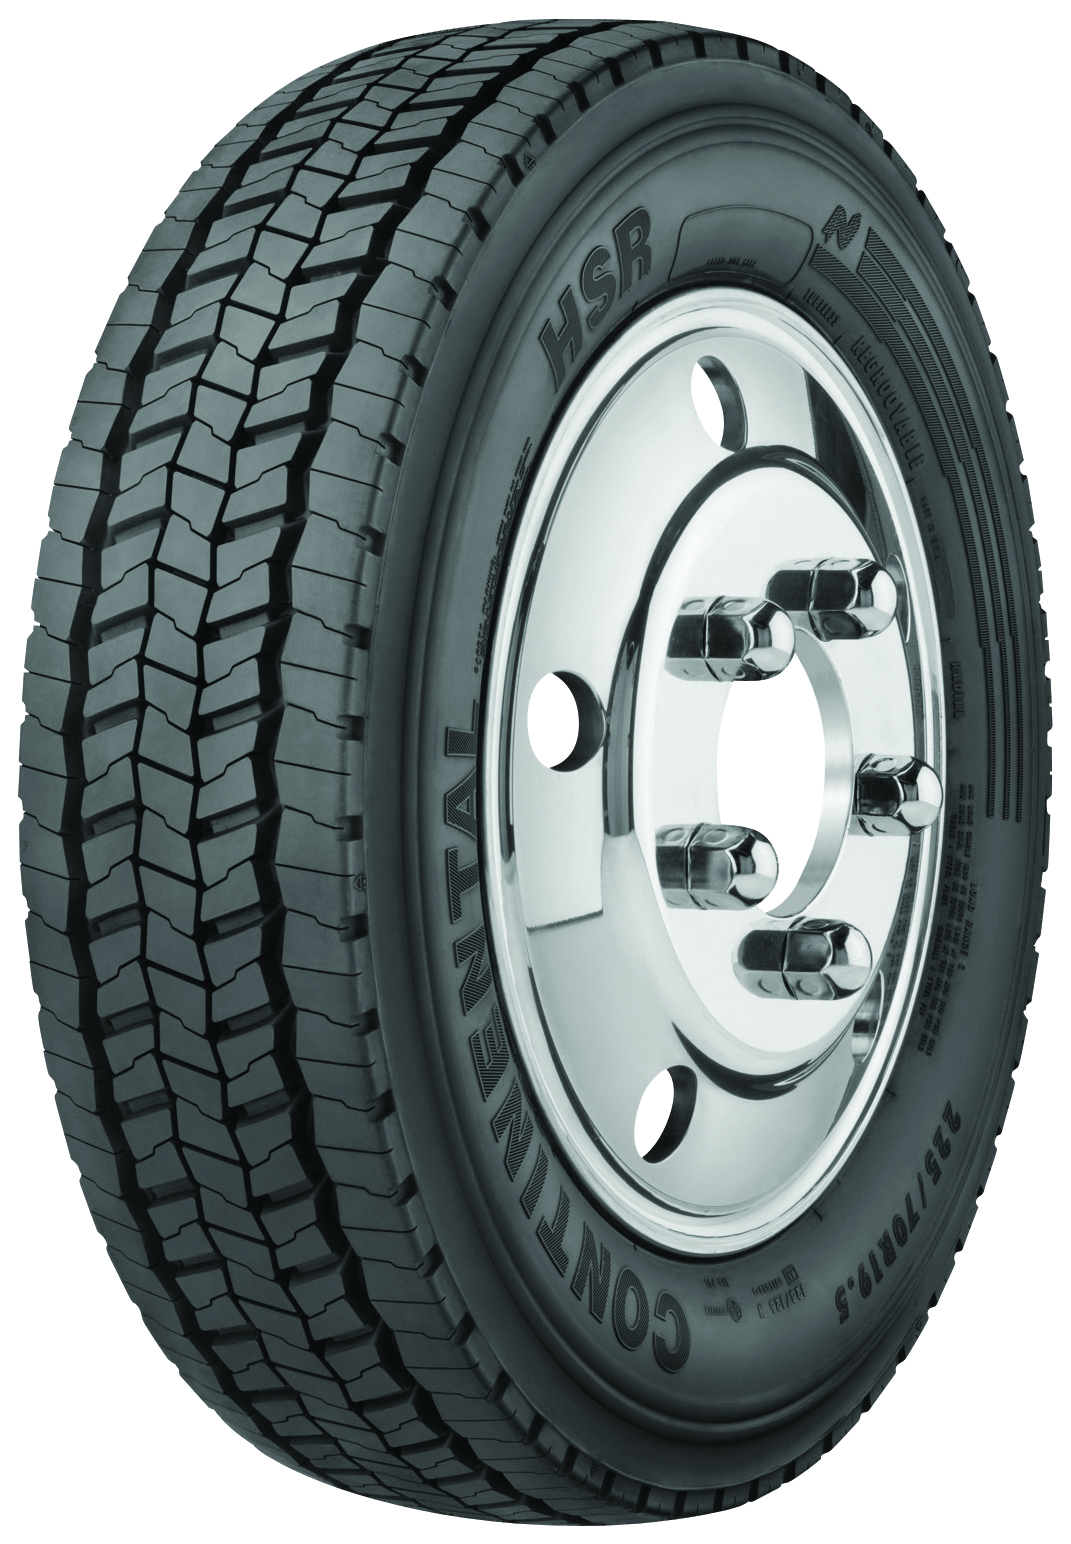 Continental updates light truck tires | Commercial Carrier Journal